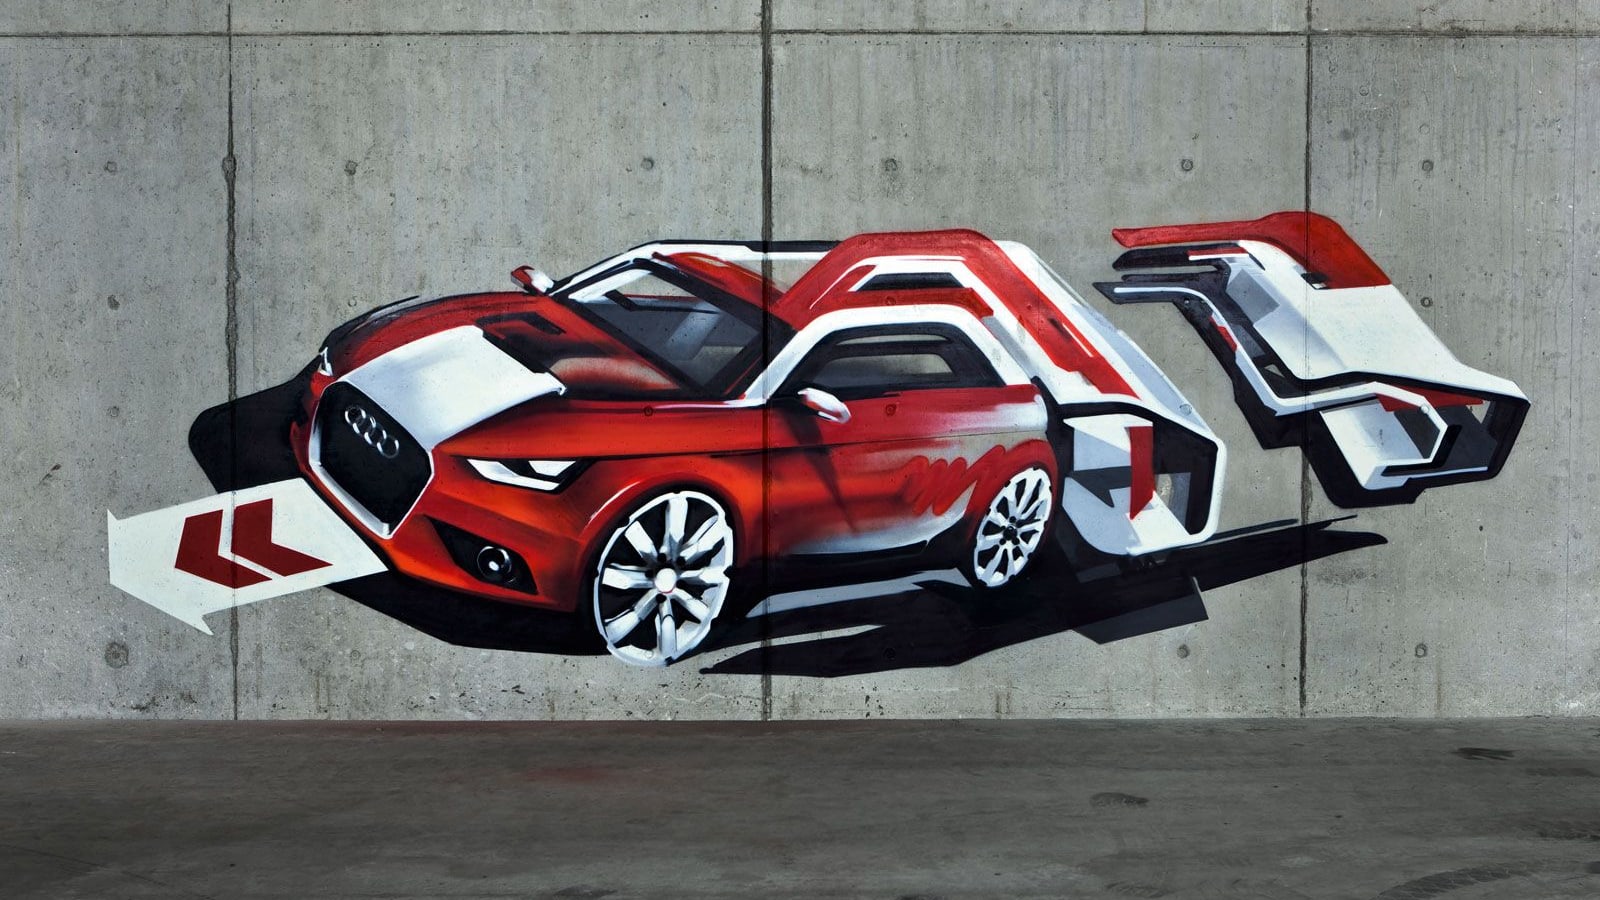 Audi A1 teased ahead of 2010 Geneva Motor Show